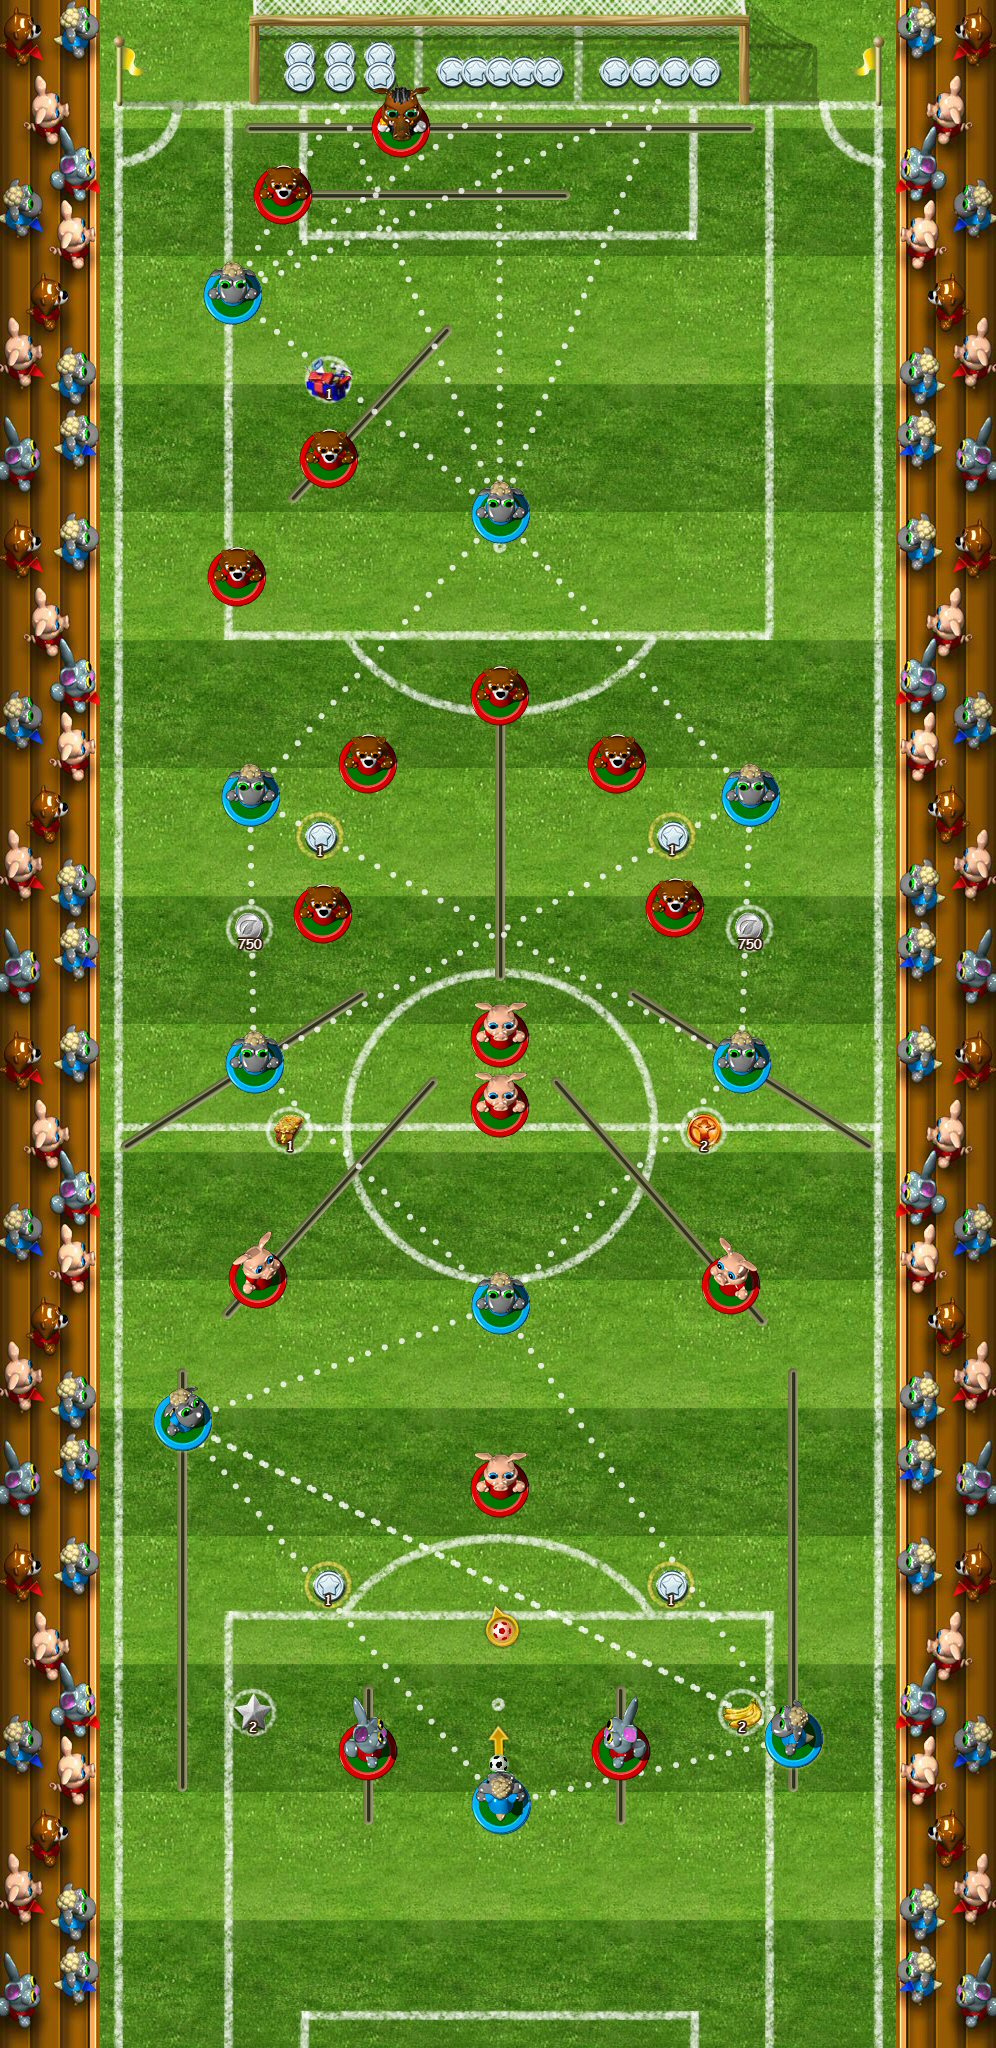 soccerjul2019_layout8.jpg